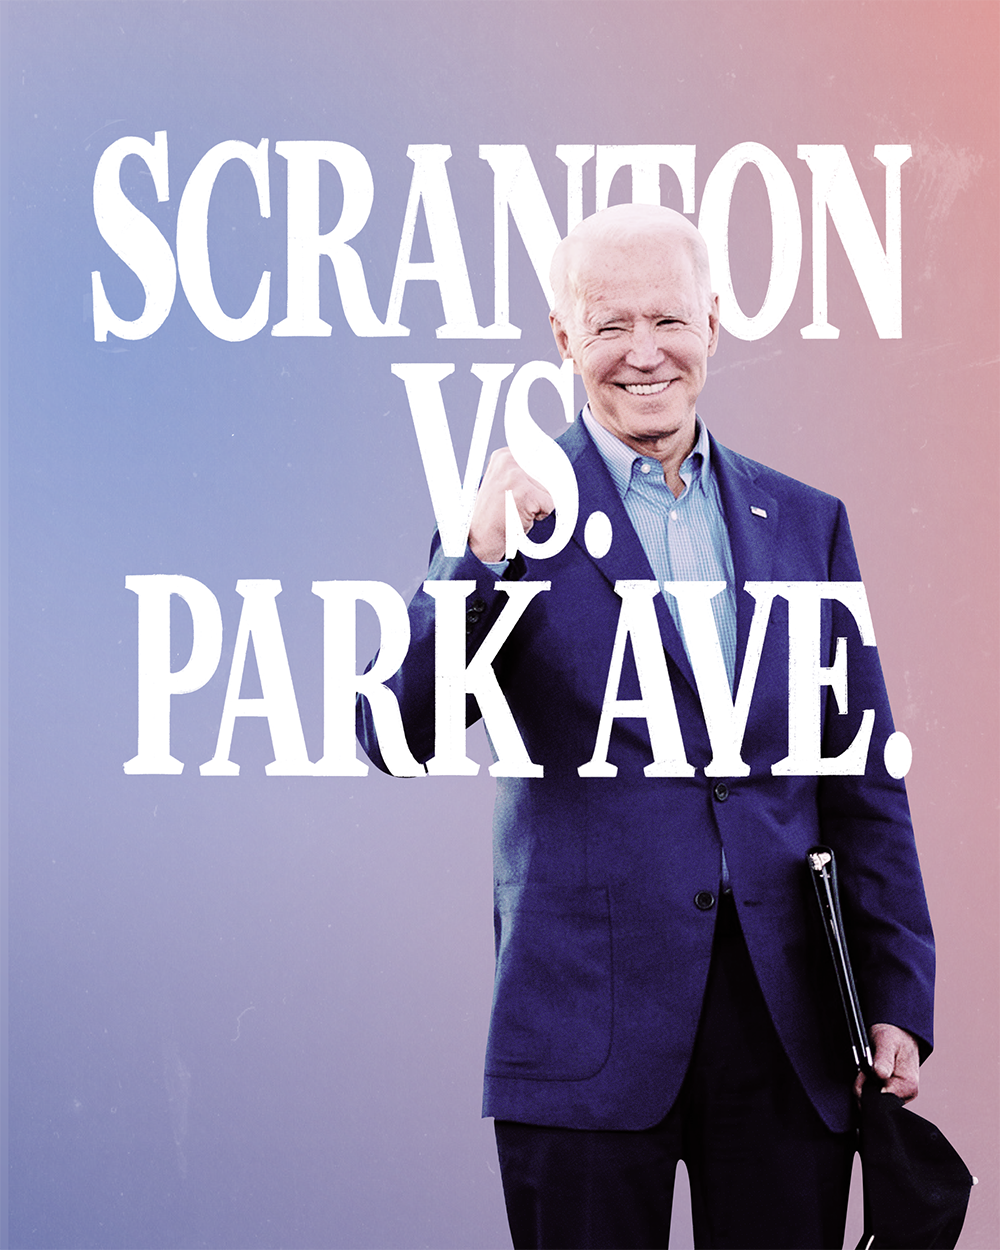 Scranton-vs-Park-Ave_social-gfx_HQ_IG_CM-4.png